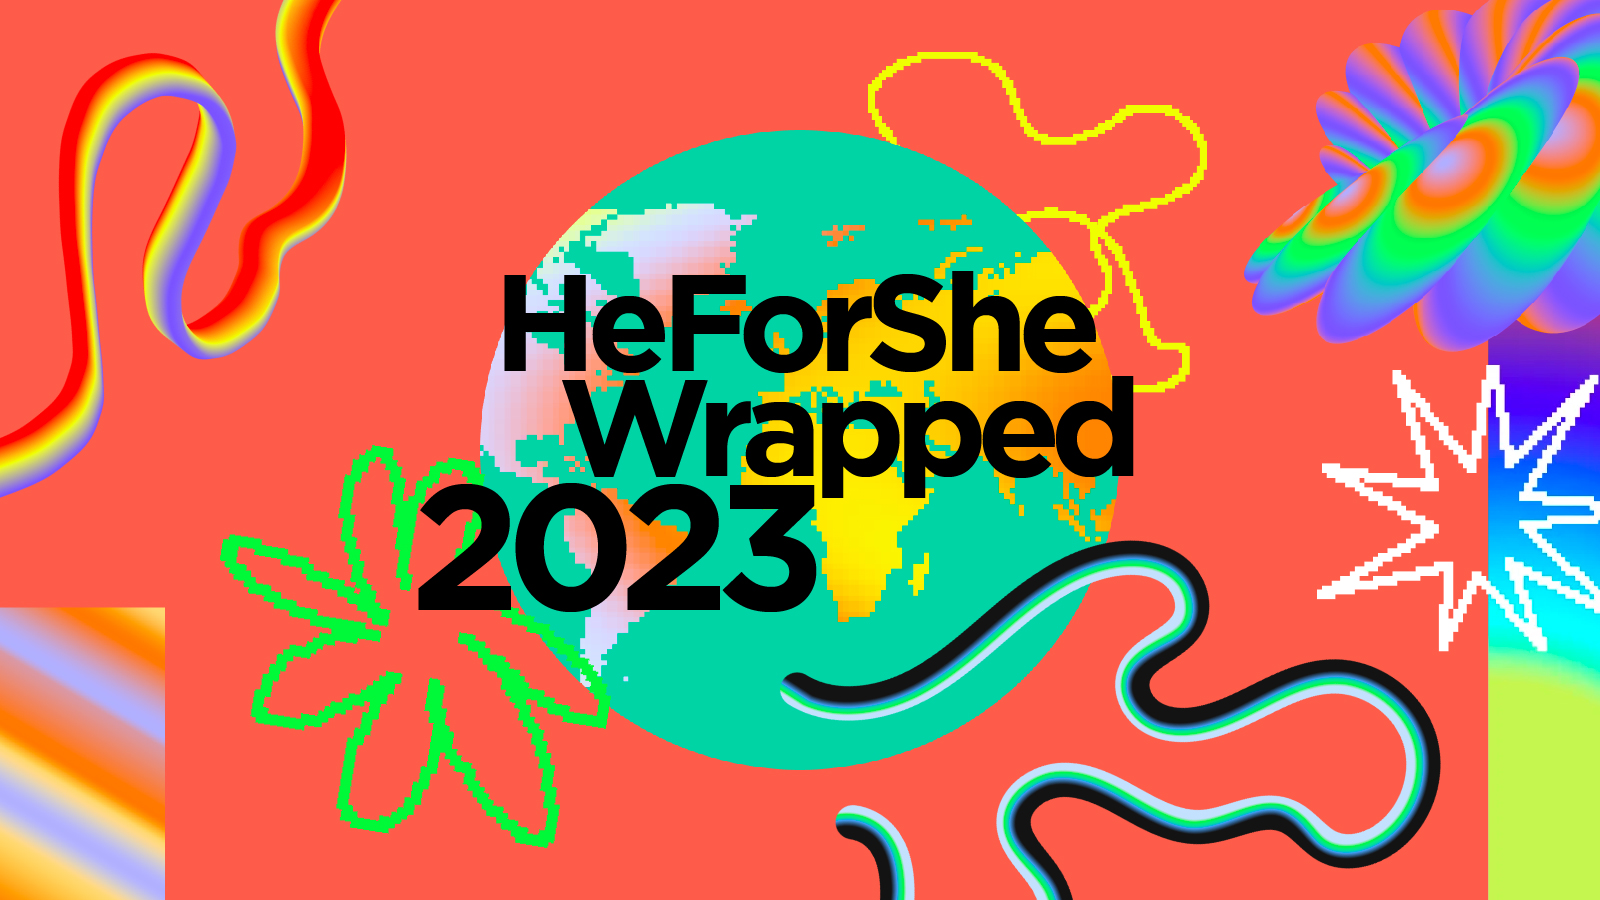 HeForShe Wrapped 2023